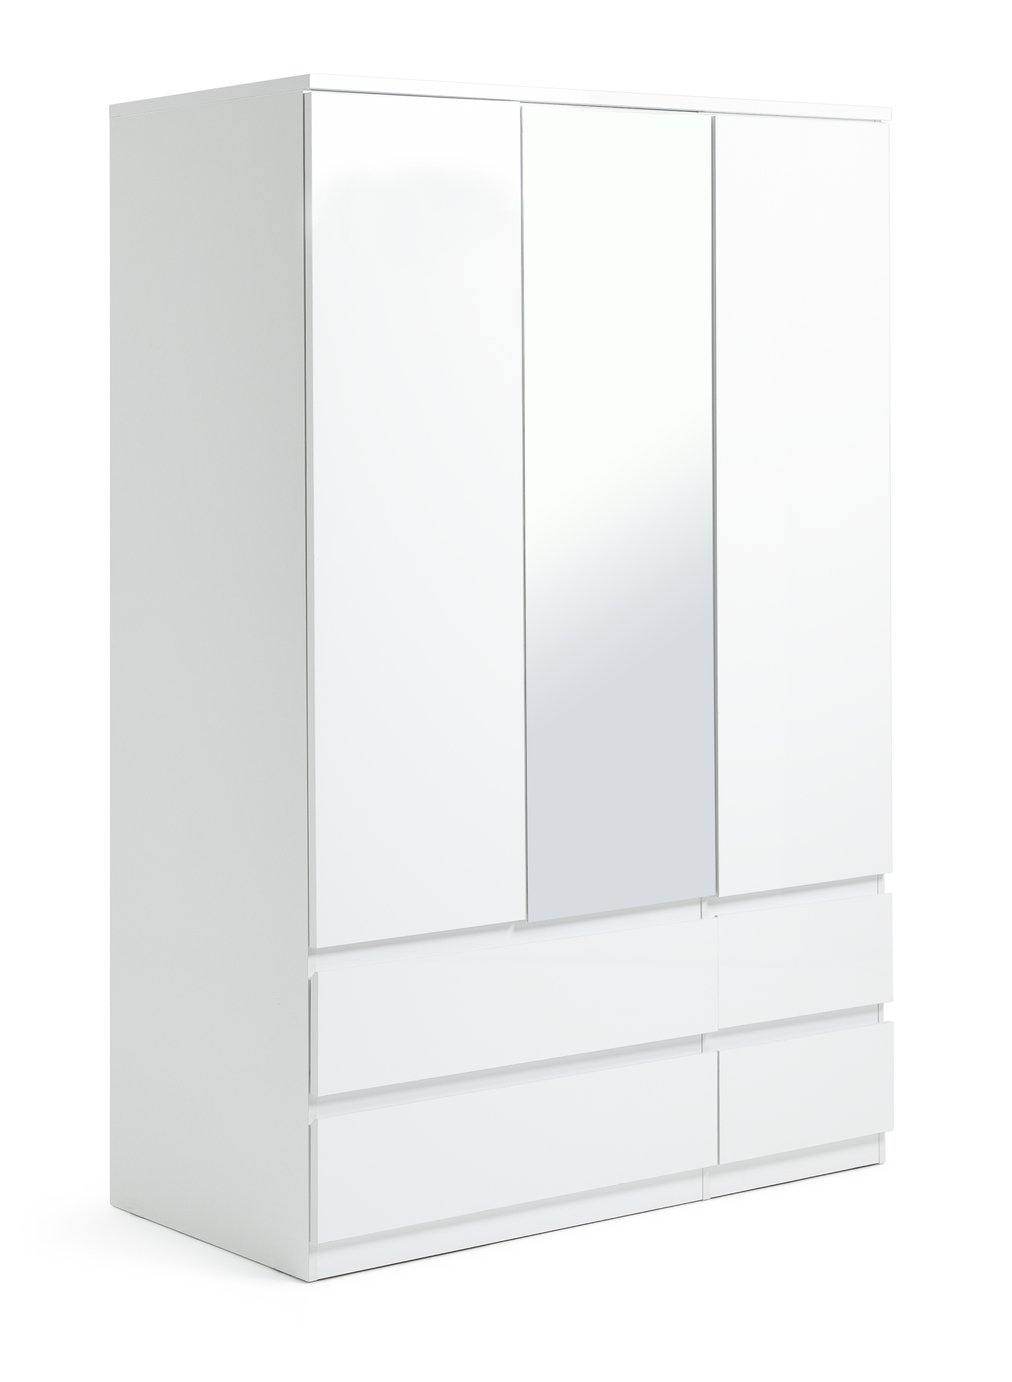 Habitat Jenson 3 Door 4 Drawer Mirror Wardrobe - White Gloss